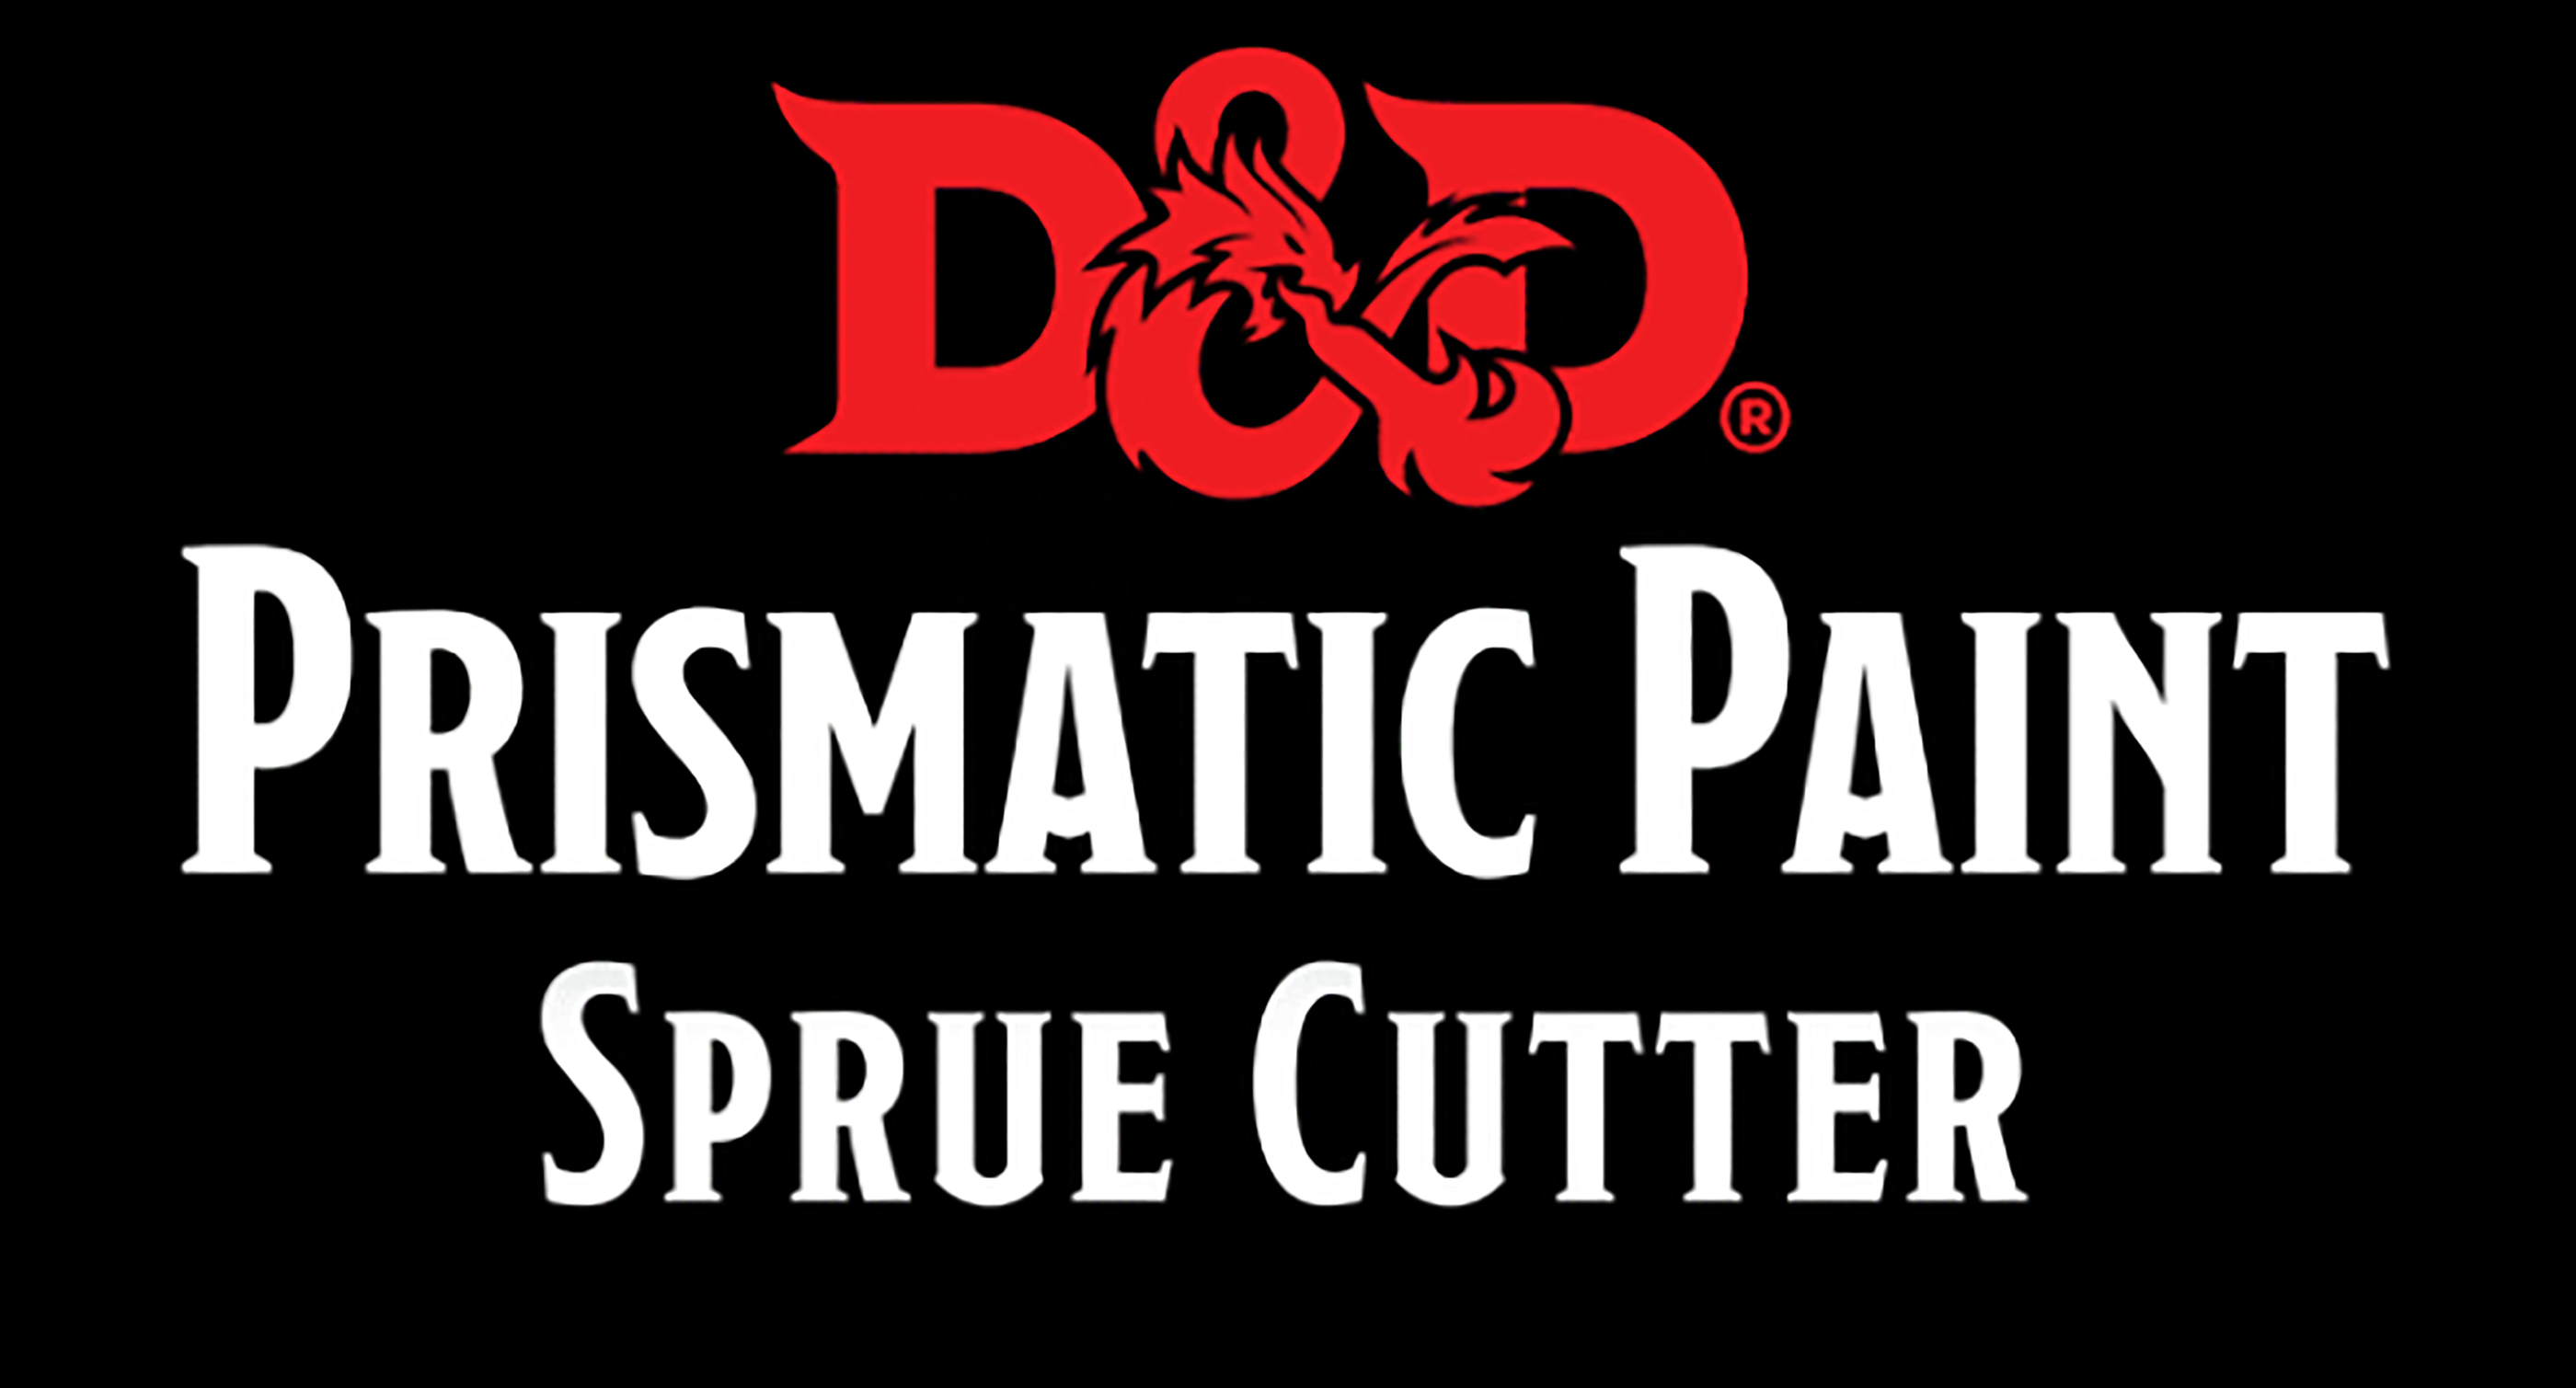 Dungeons & Dragons Prismatic Paint Sprue Cutter